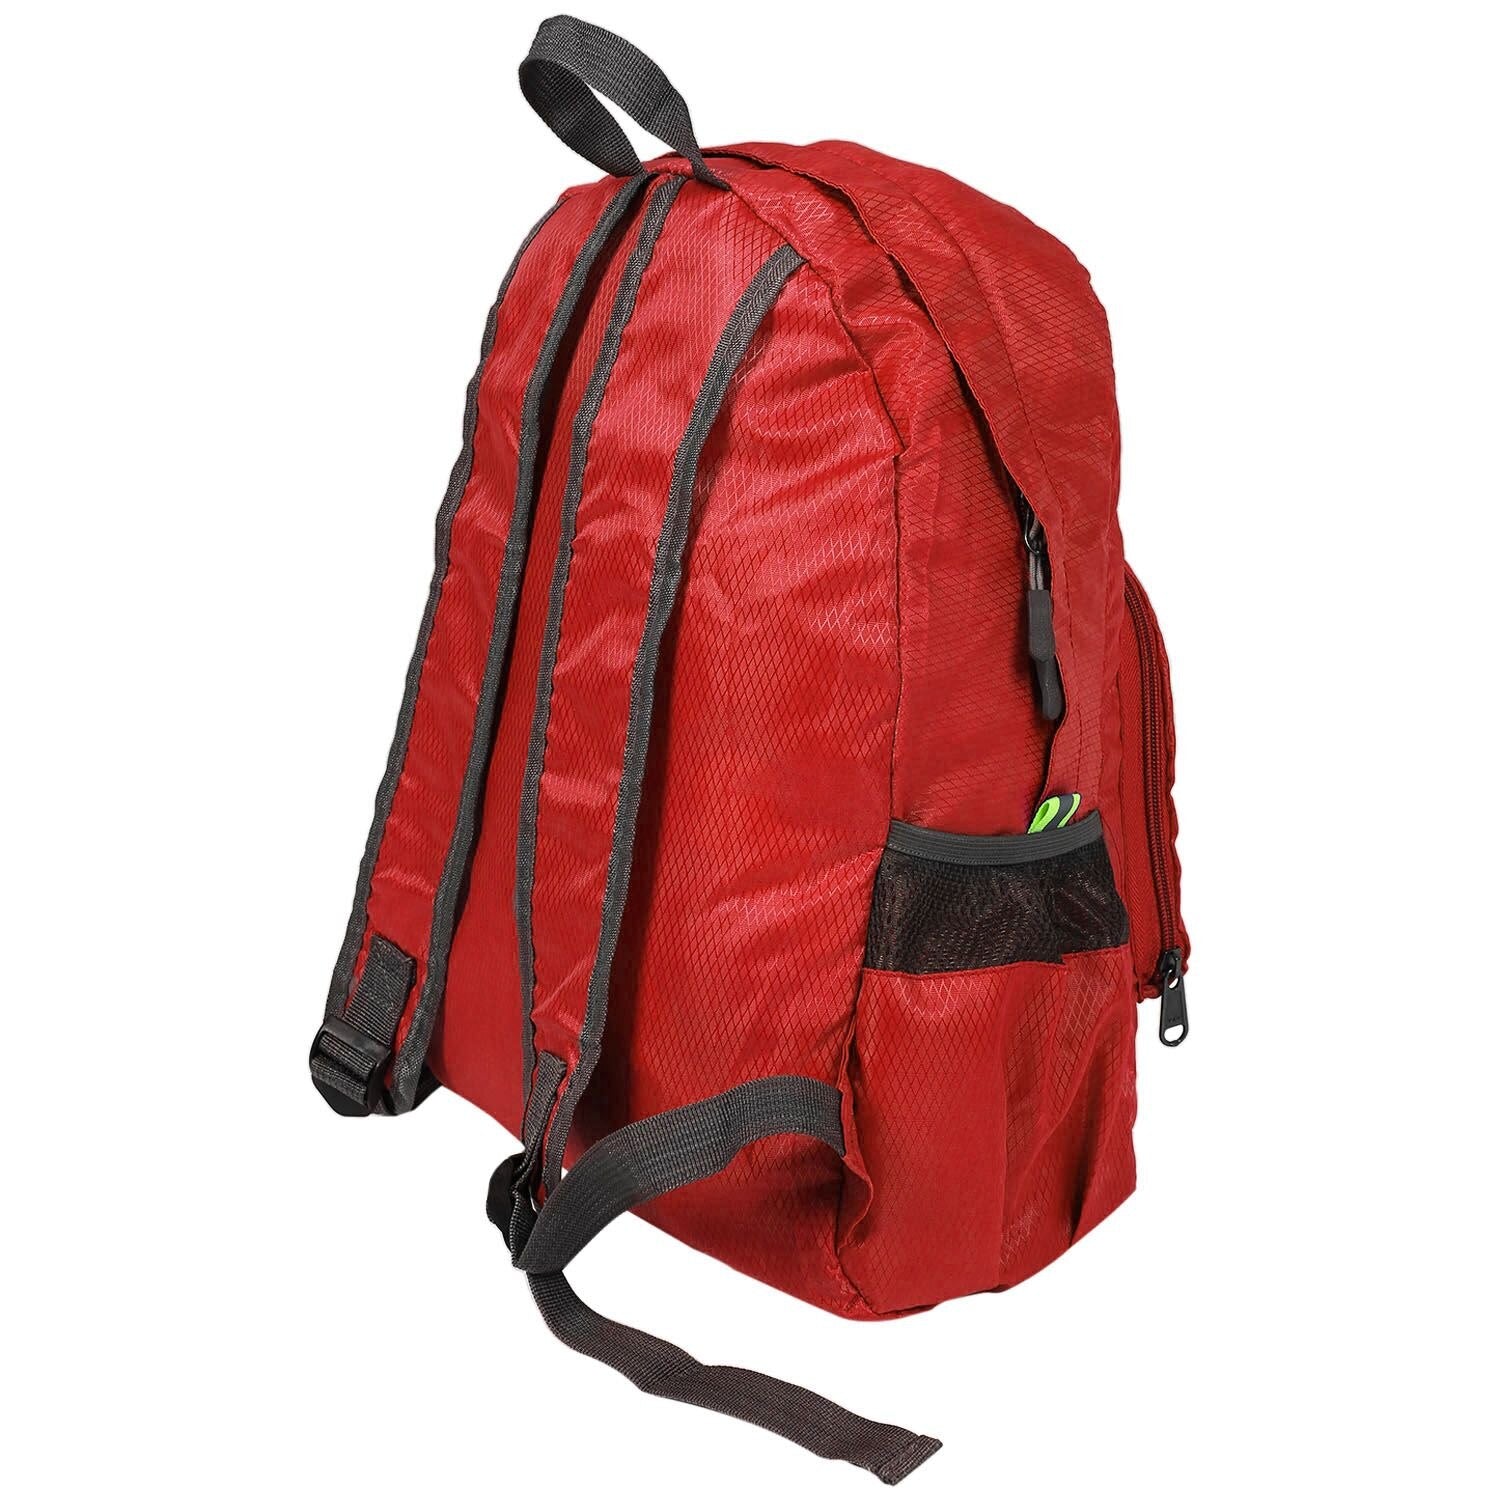 New Unisex Simple Fashion  Light-weight Backpack Shoulder Bag Daypack Rucksack Organizer Foldable - ebowsos